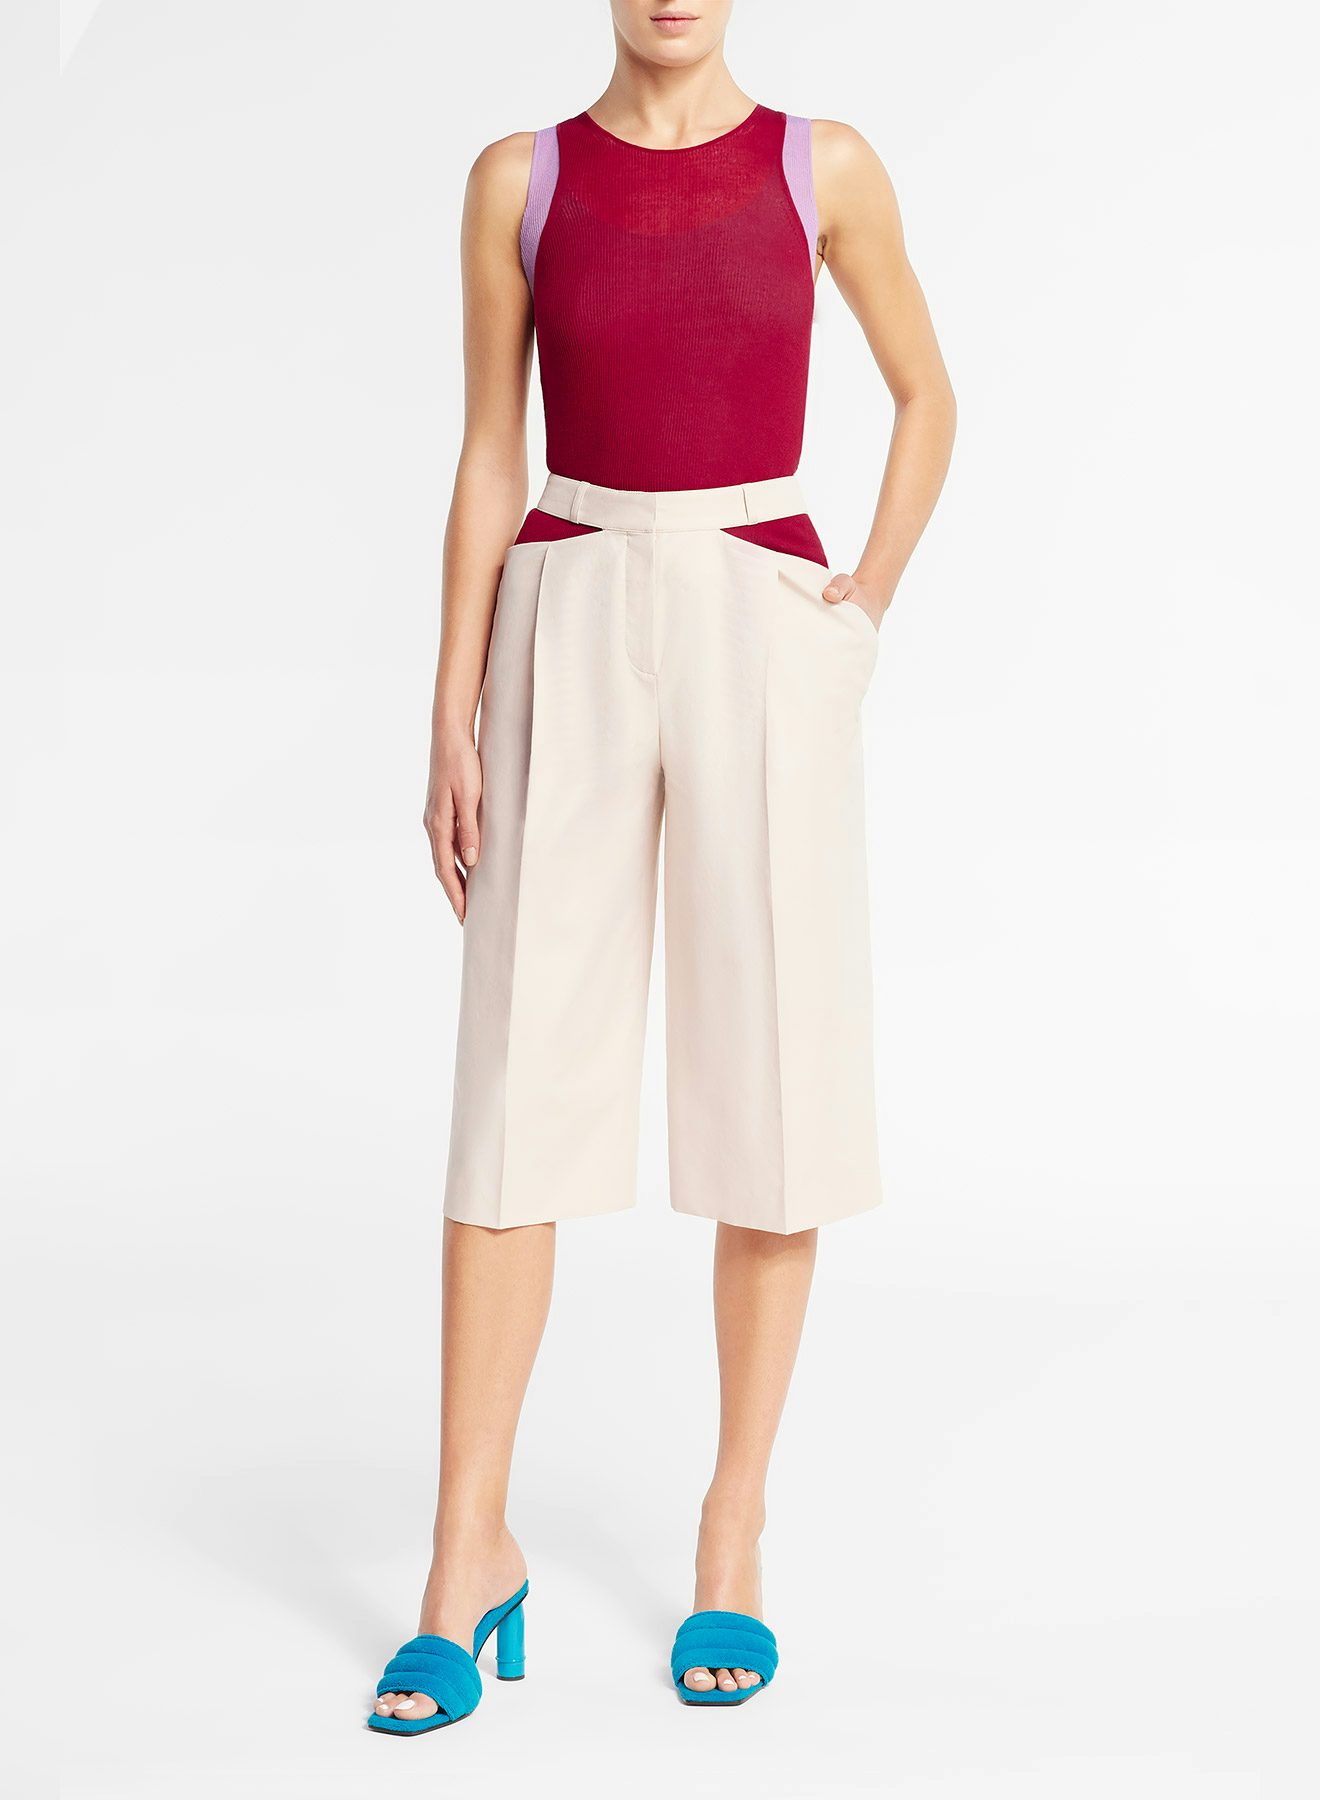 Pale pink technical cotton Bermuda shorts - Nina Ricci